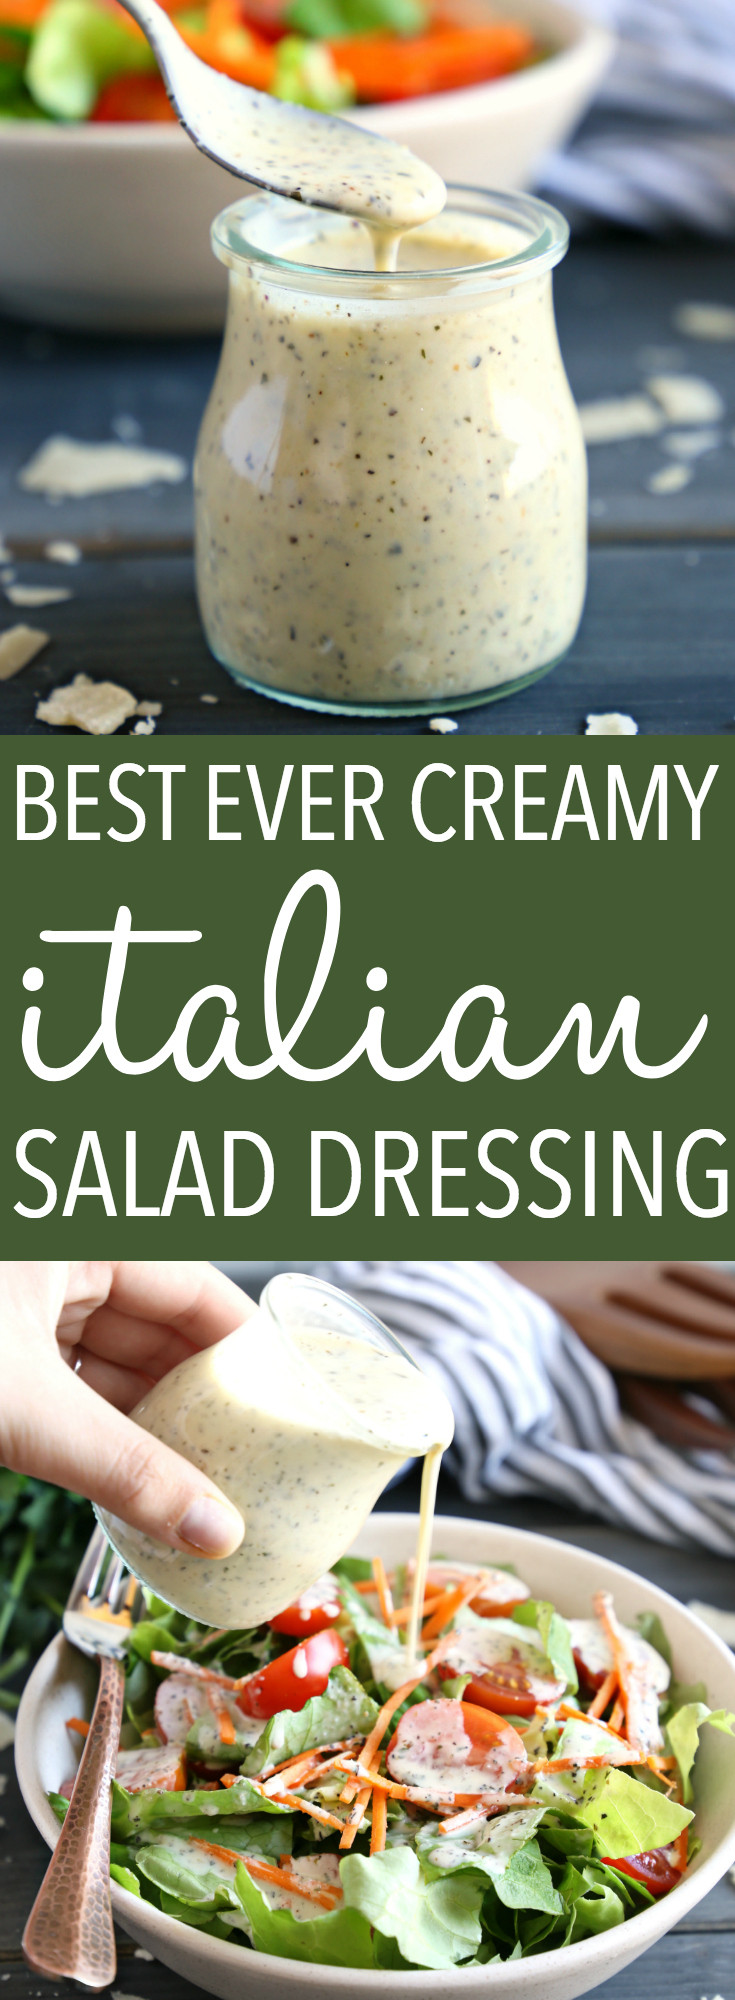 Best Salad Dressings
 Classic Creamy Italian Salad Dressing Easy to Make